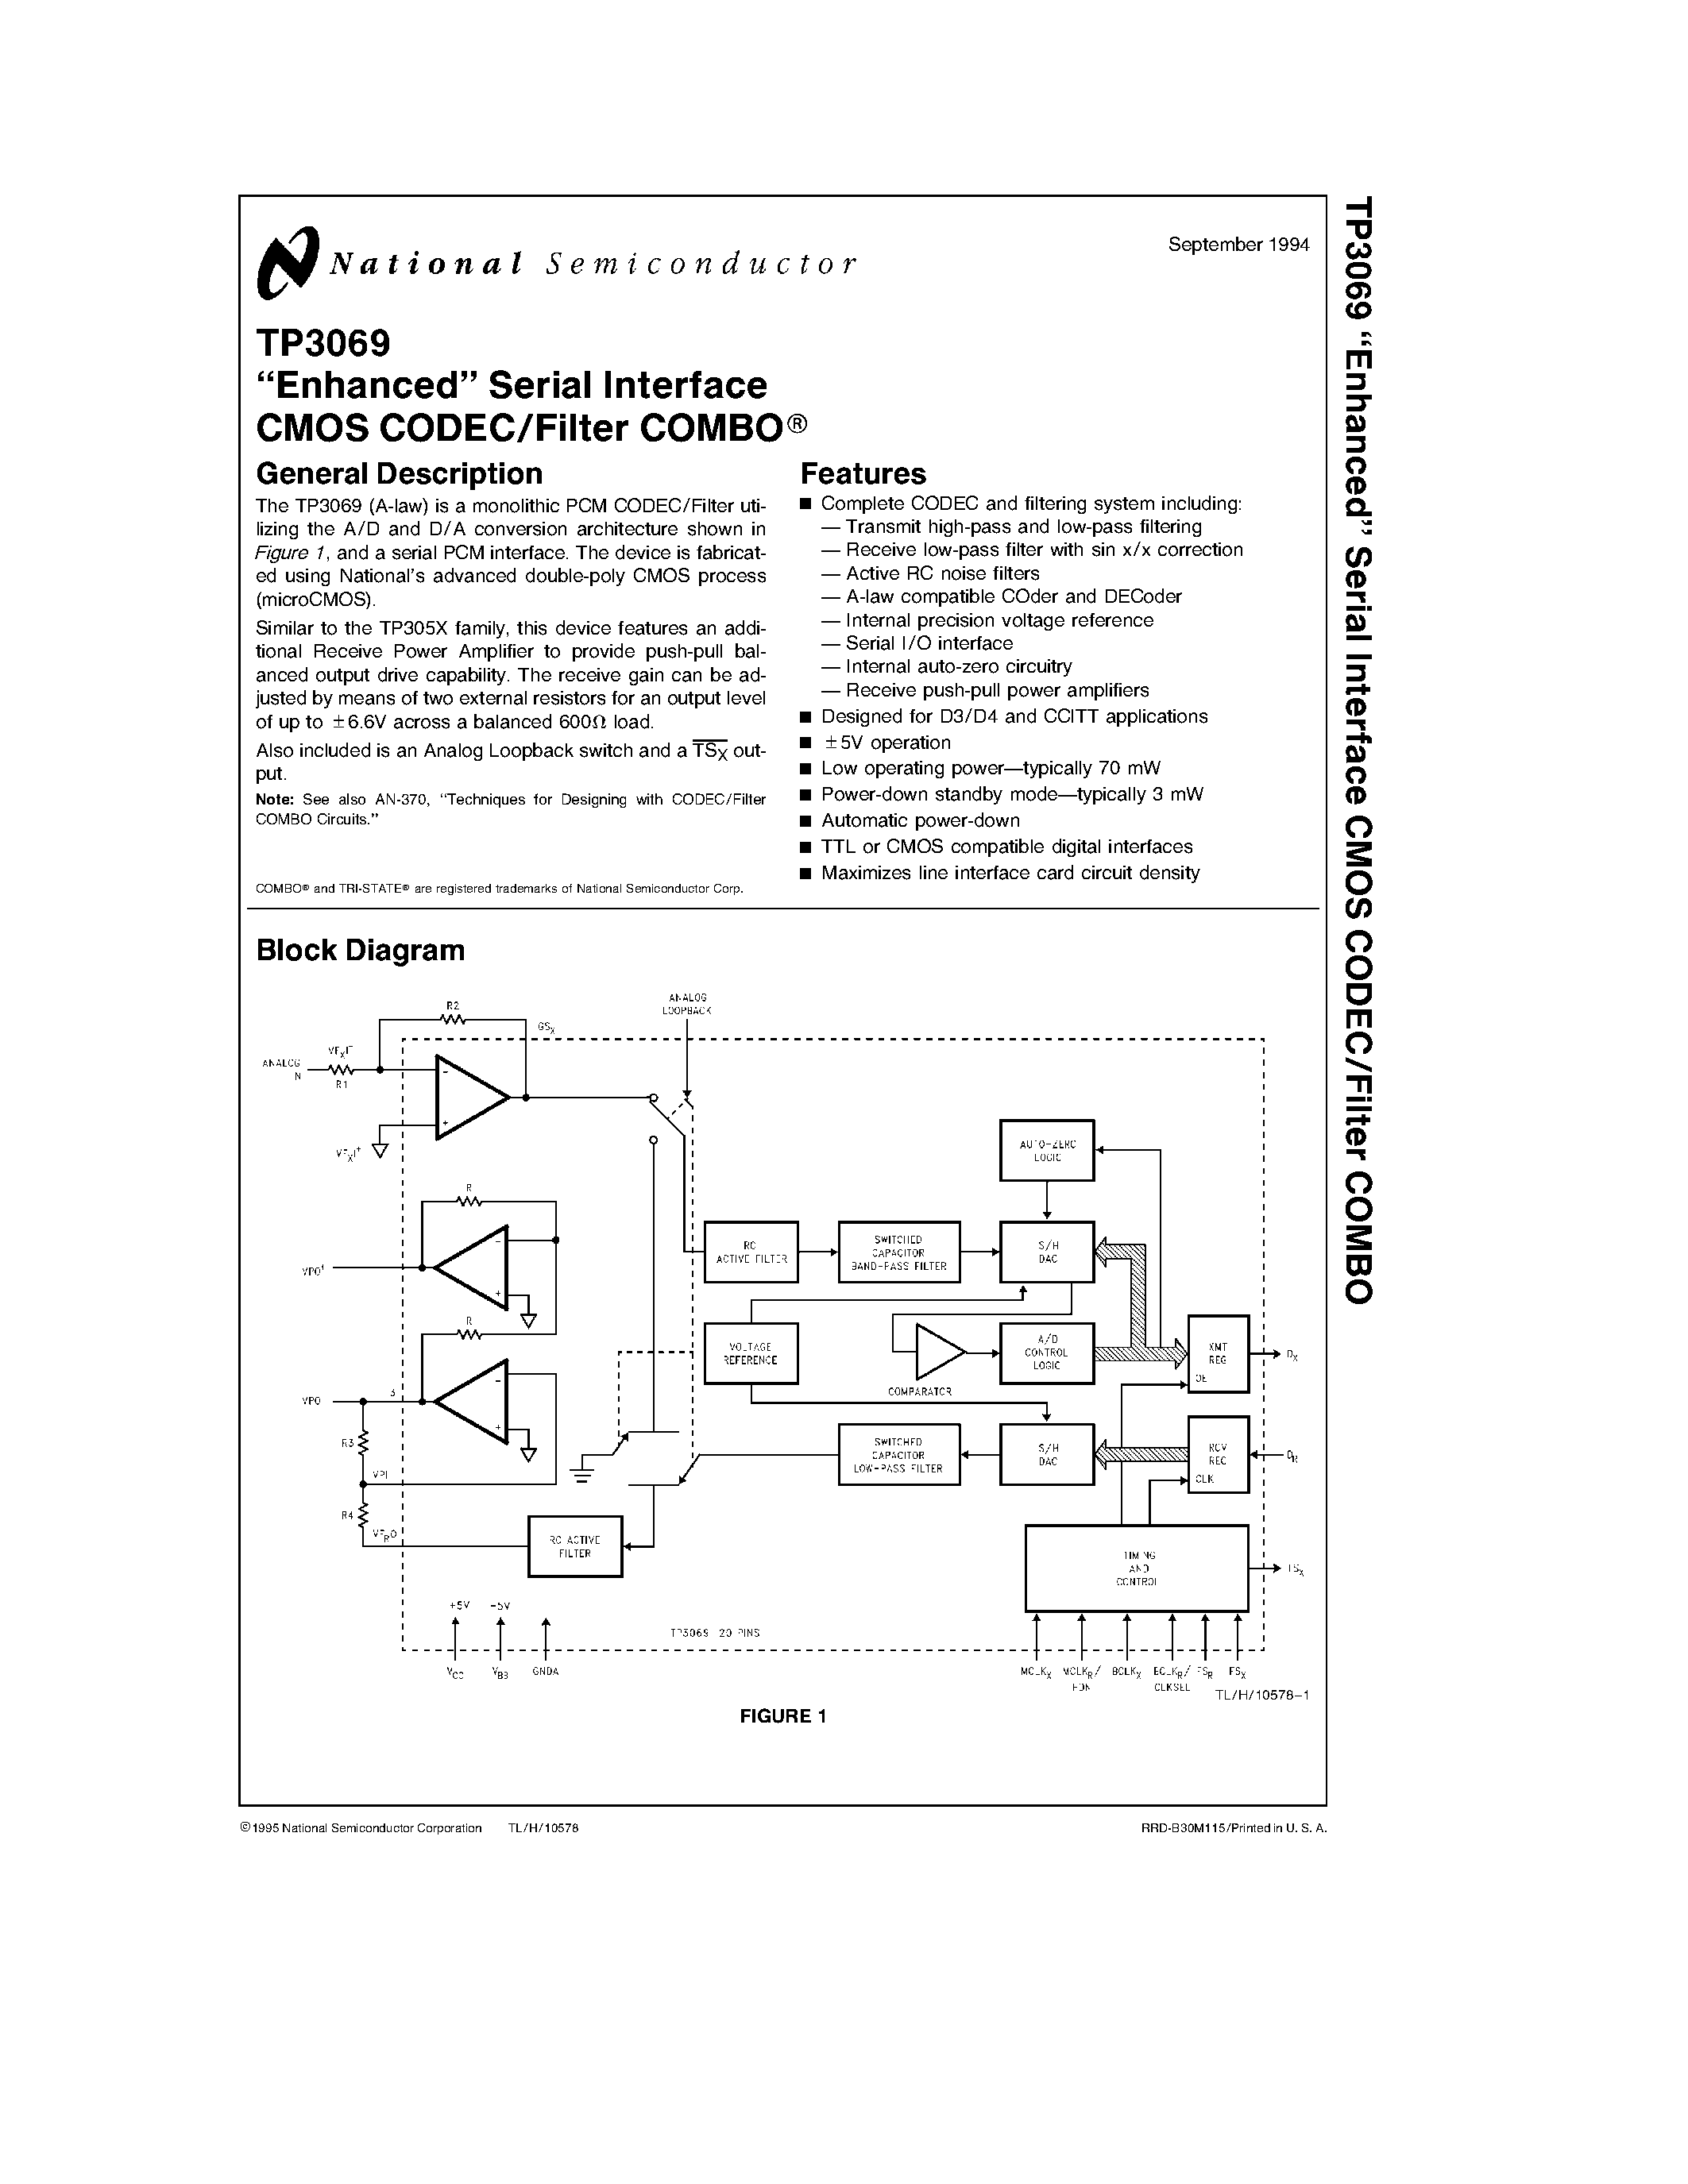 Даташит TP3069 - Enhanced Serial Interface CMOS CODEC/Filter COMBO страница 1